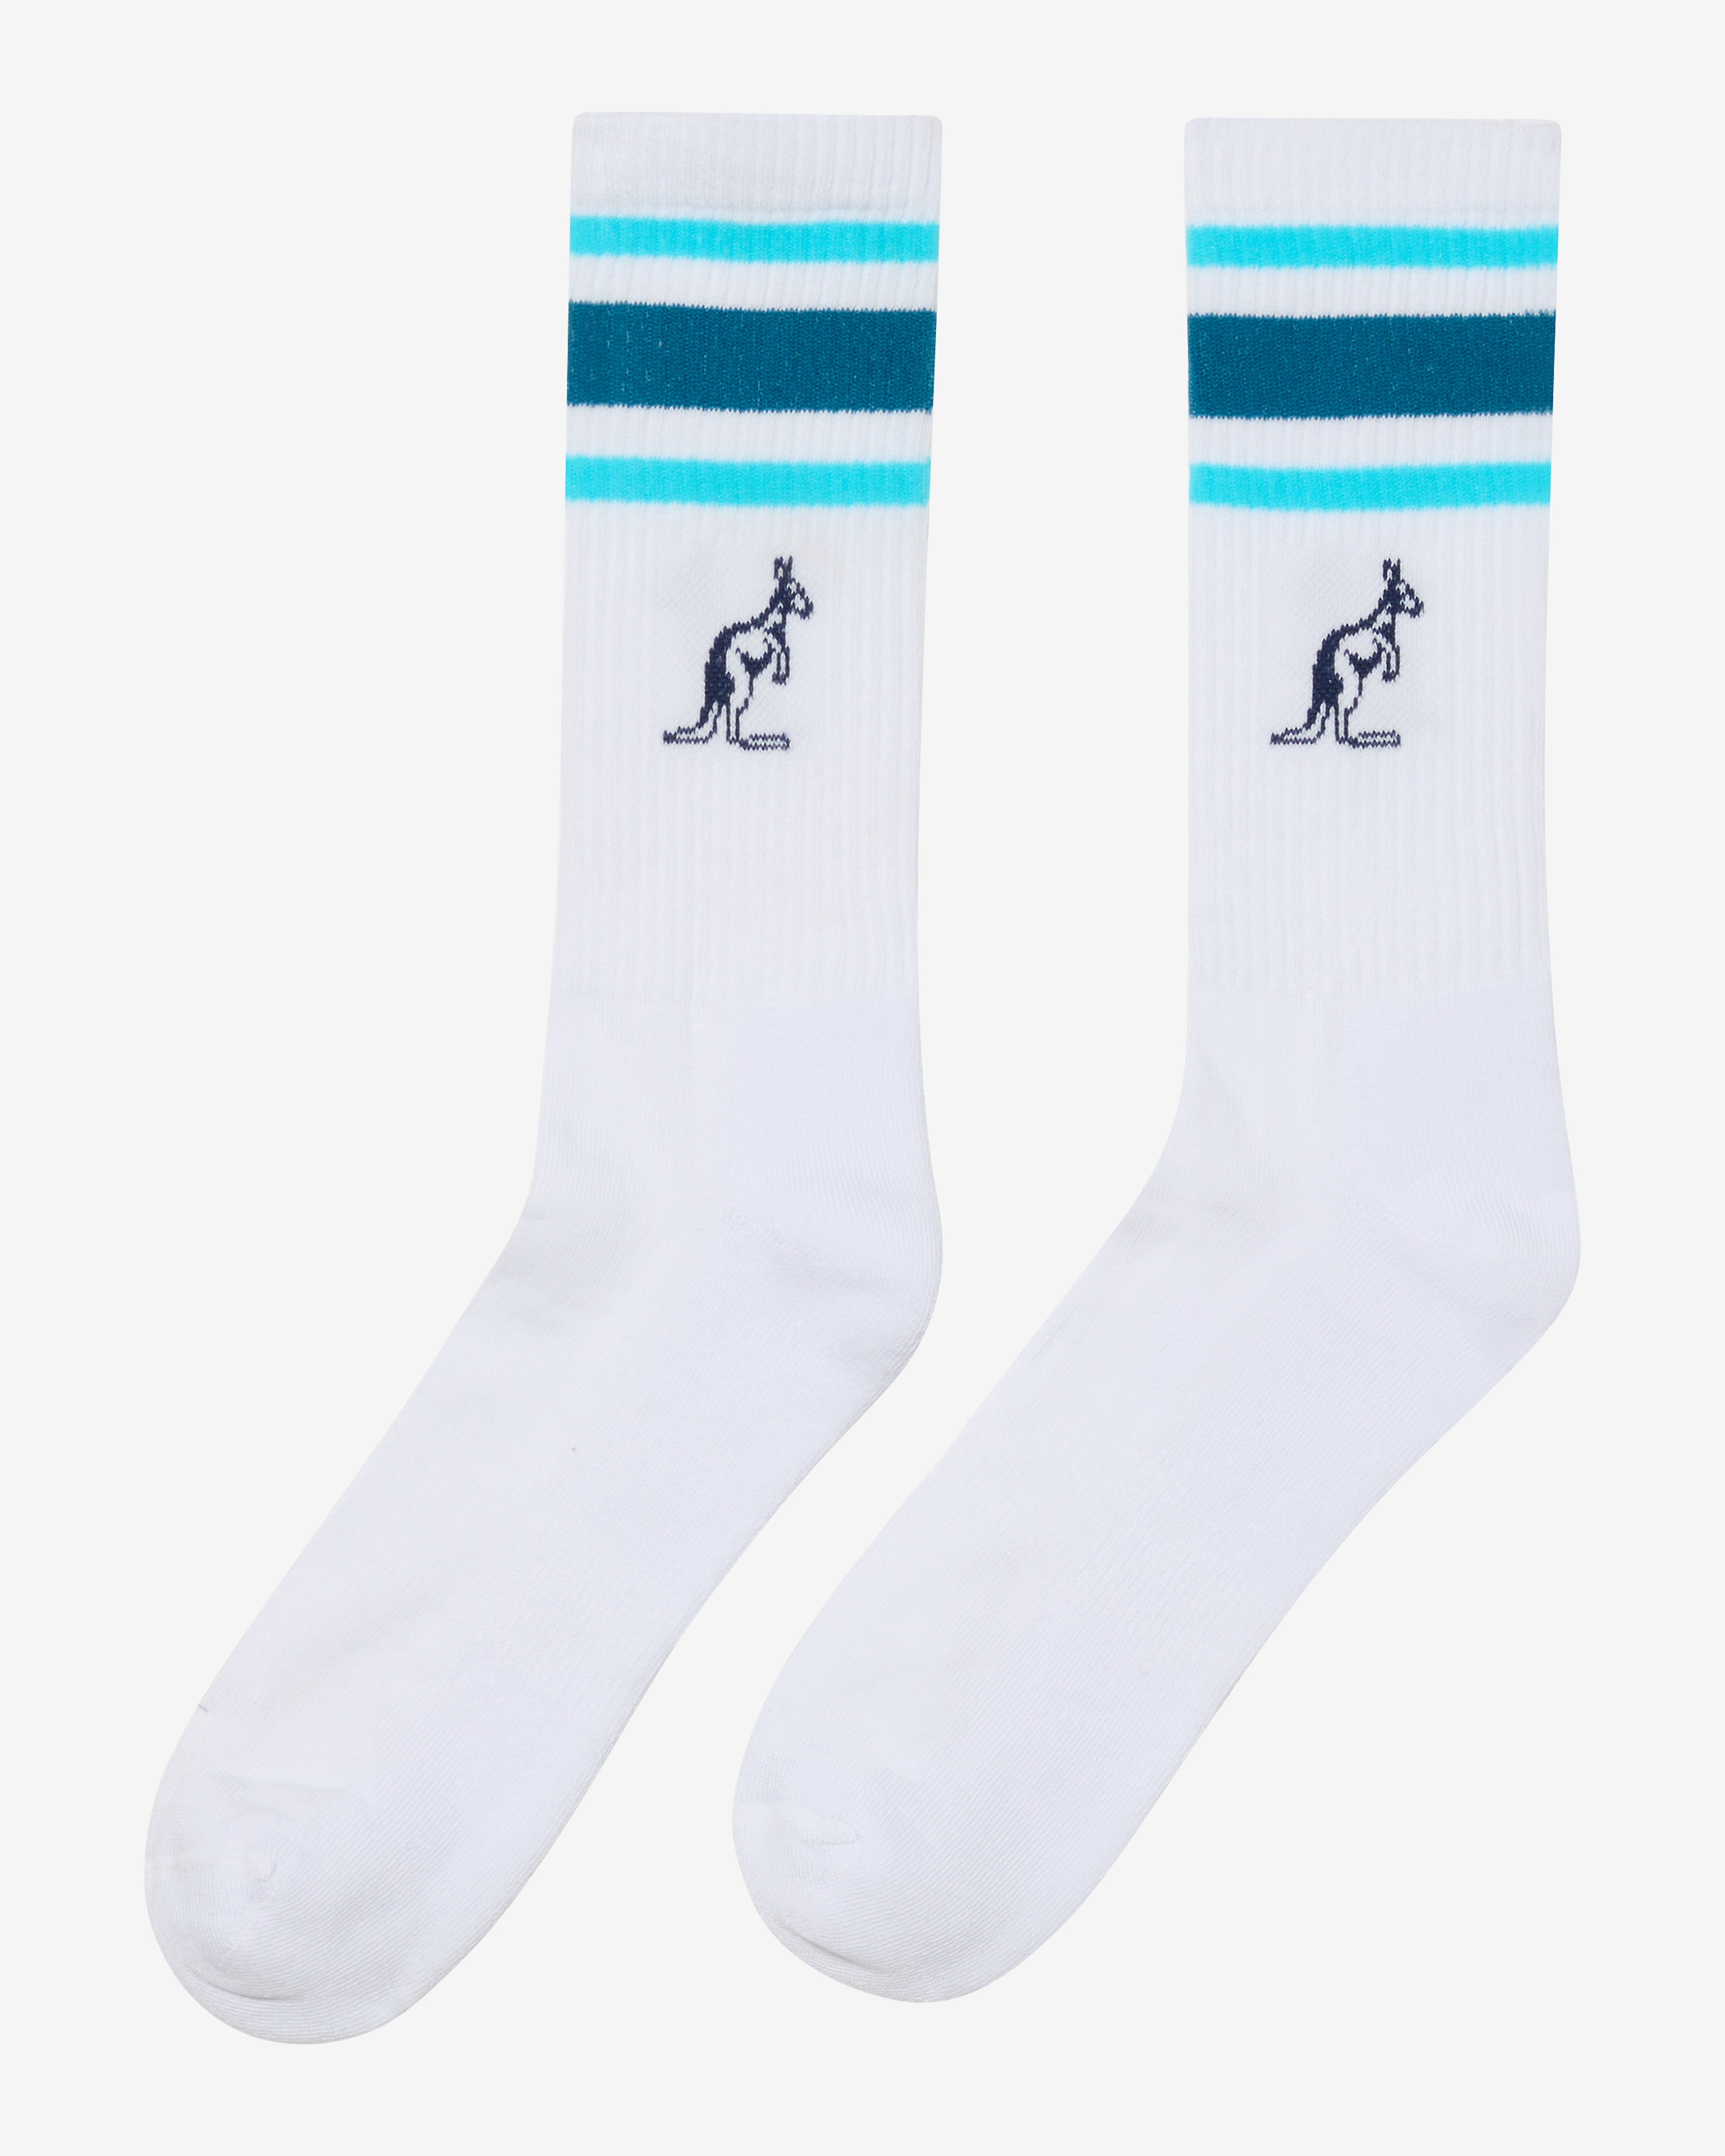 Stripes Socks: Australian Tennis